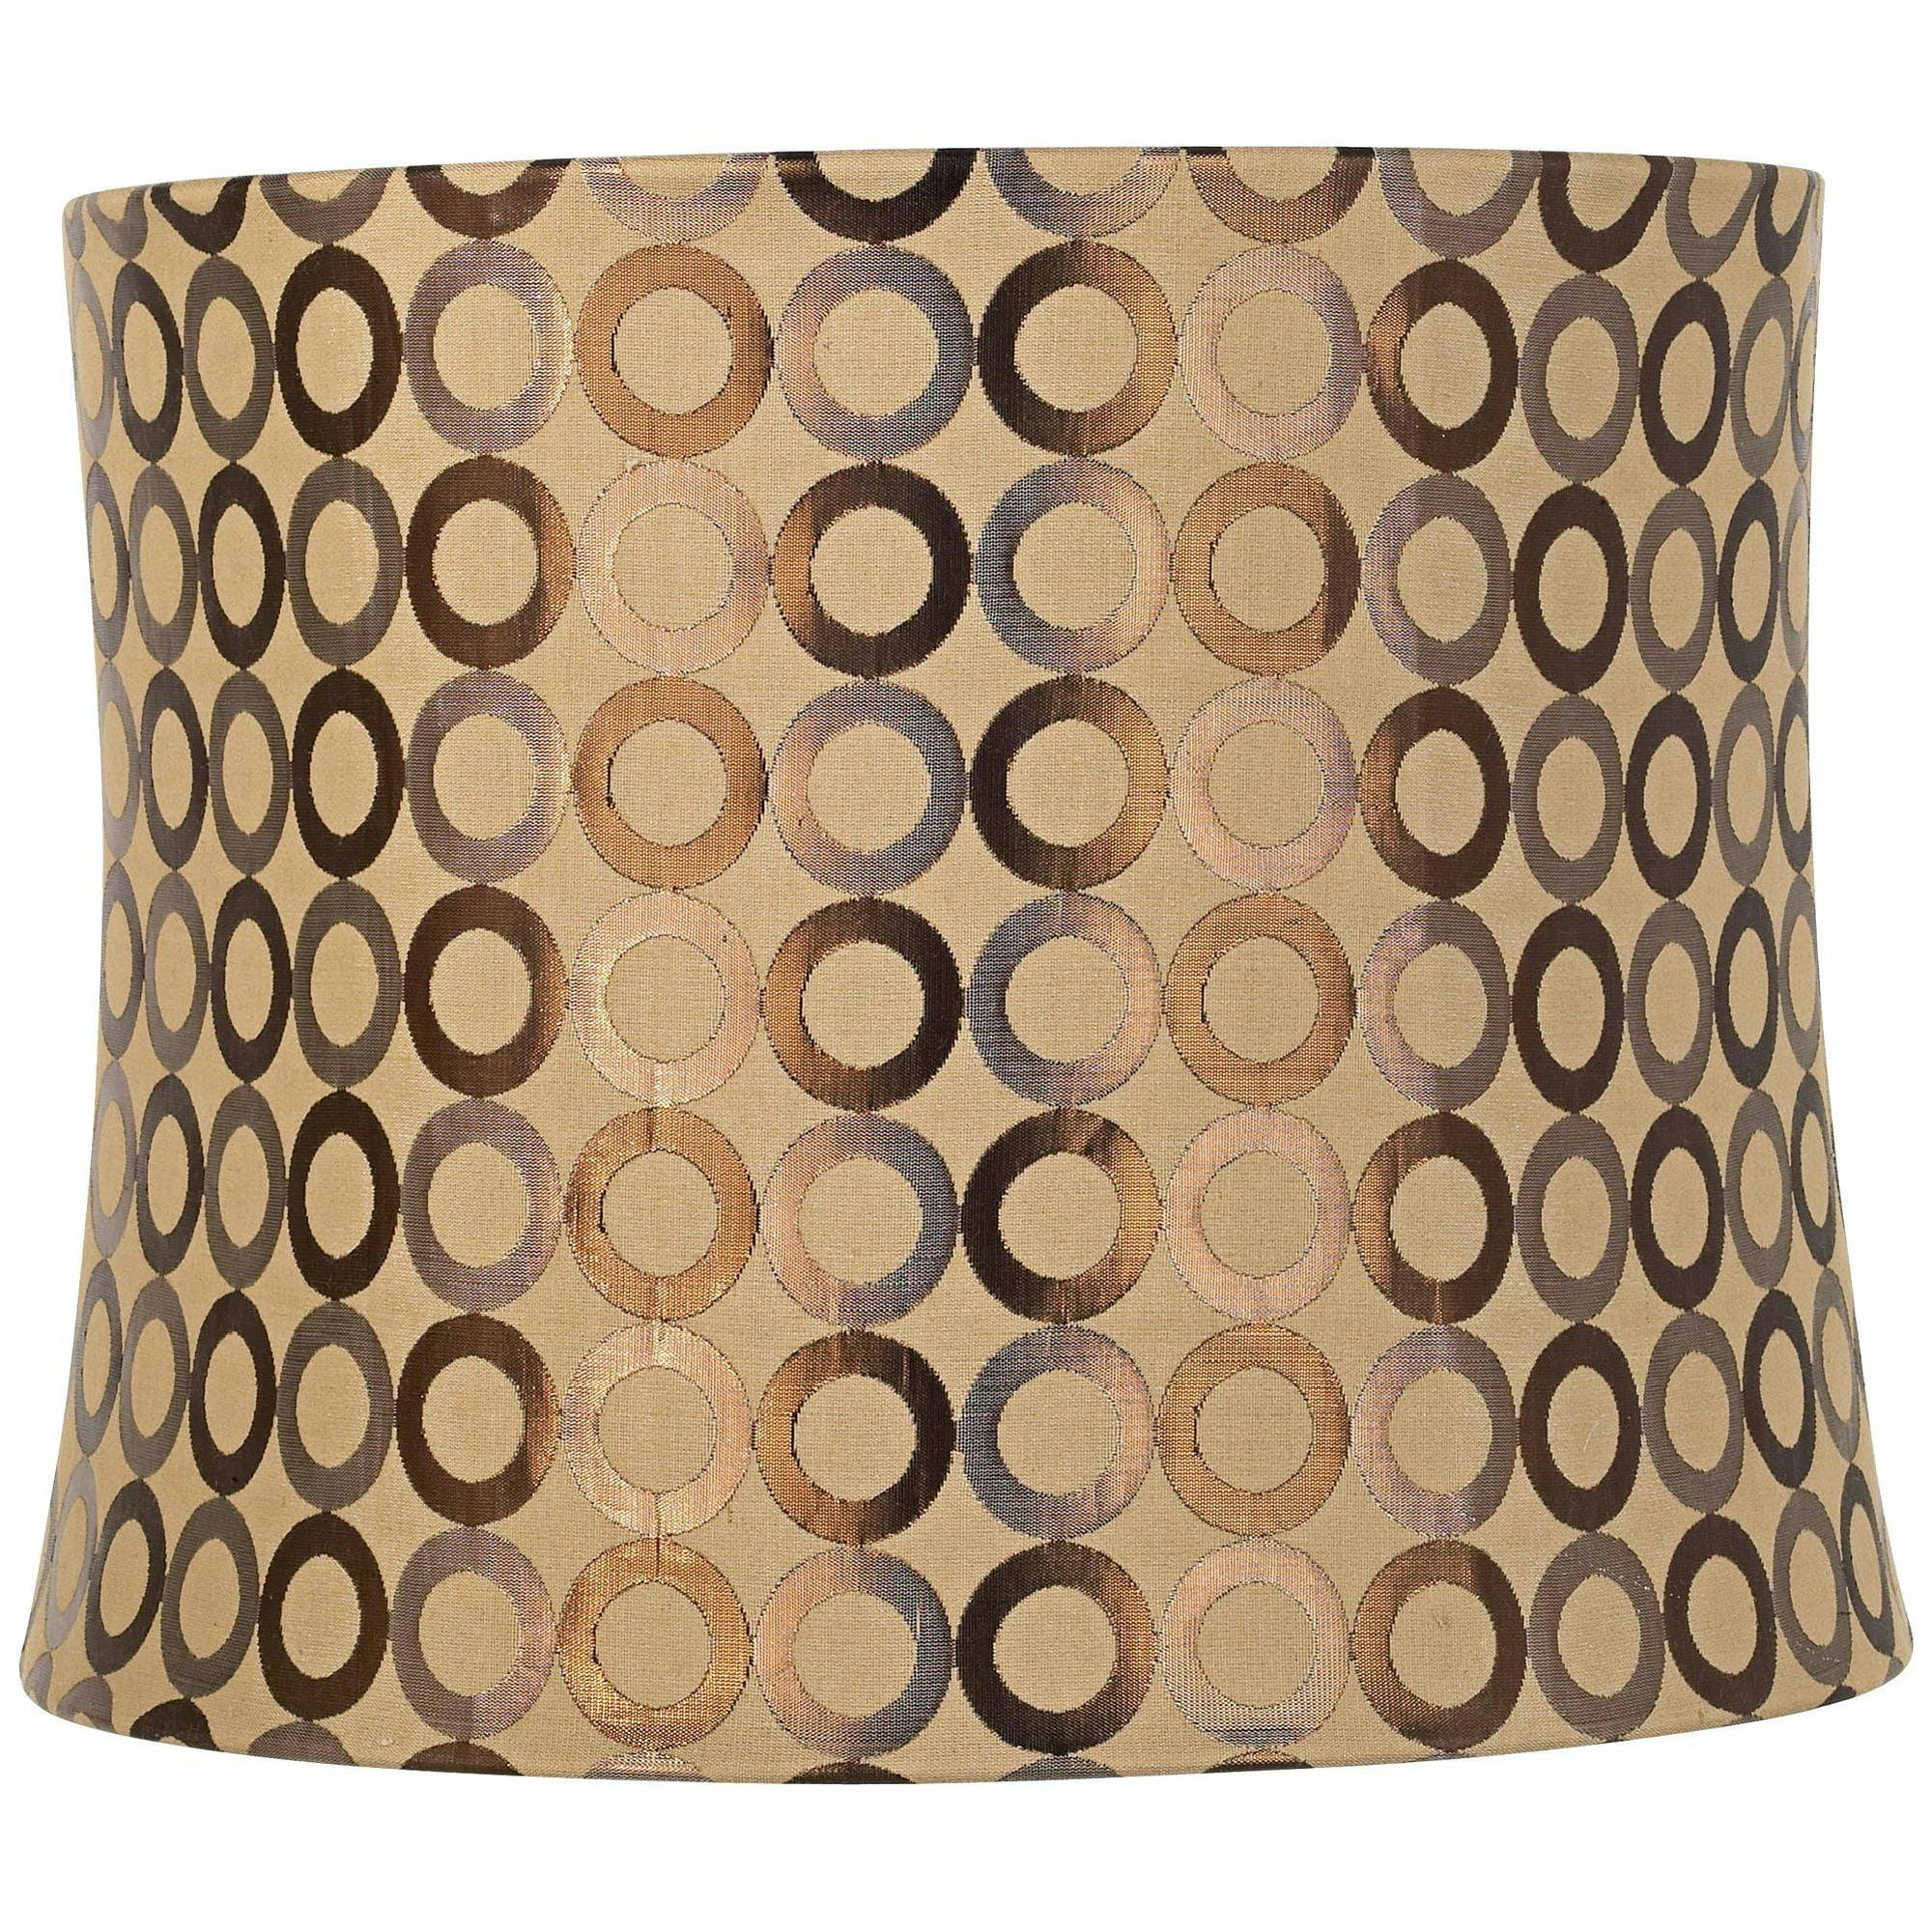 Tan Fabric Drum Lamp Shade with Copper Metallic Circles 14"x11"